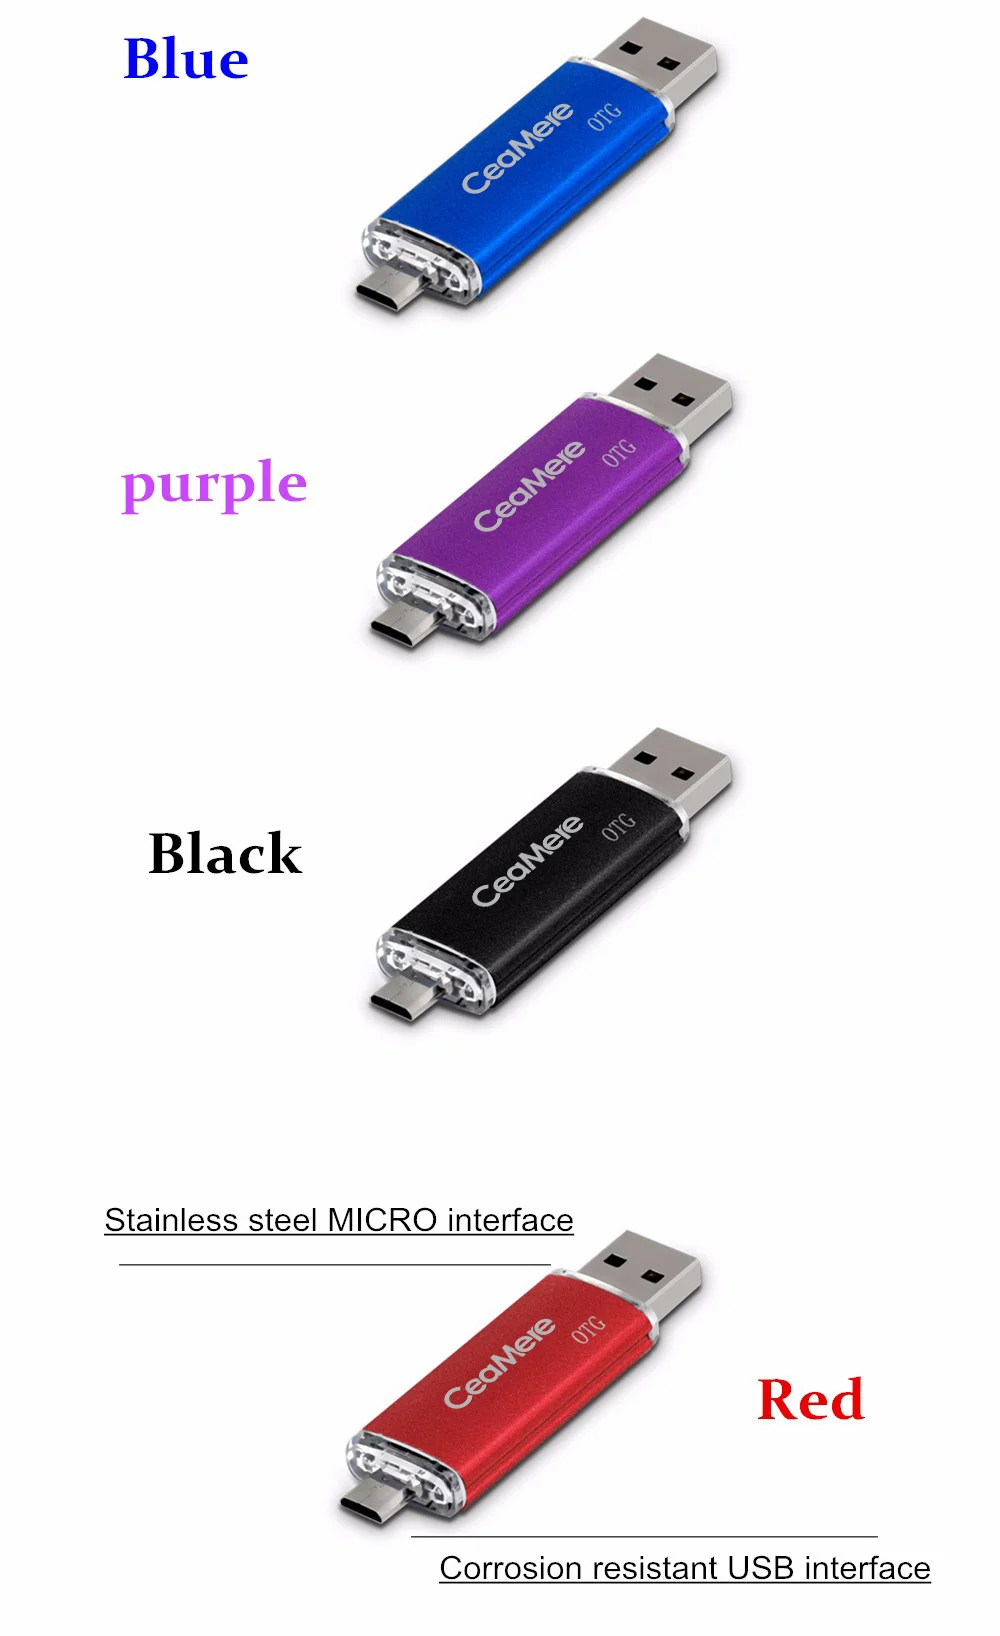 Флеш-накопитель Smare otg USB флэш-накопитель смартфон 16gb32 GB/64 GB/128 GB флеш-накопитель флеш-диск USB 2,0 для смартфона